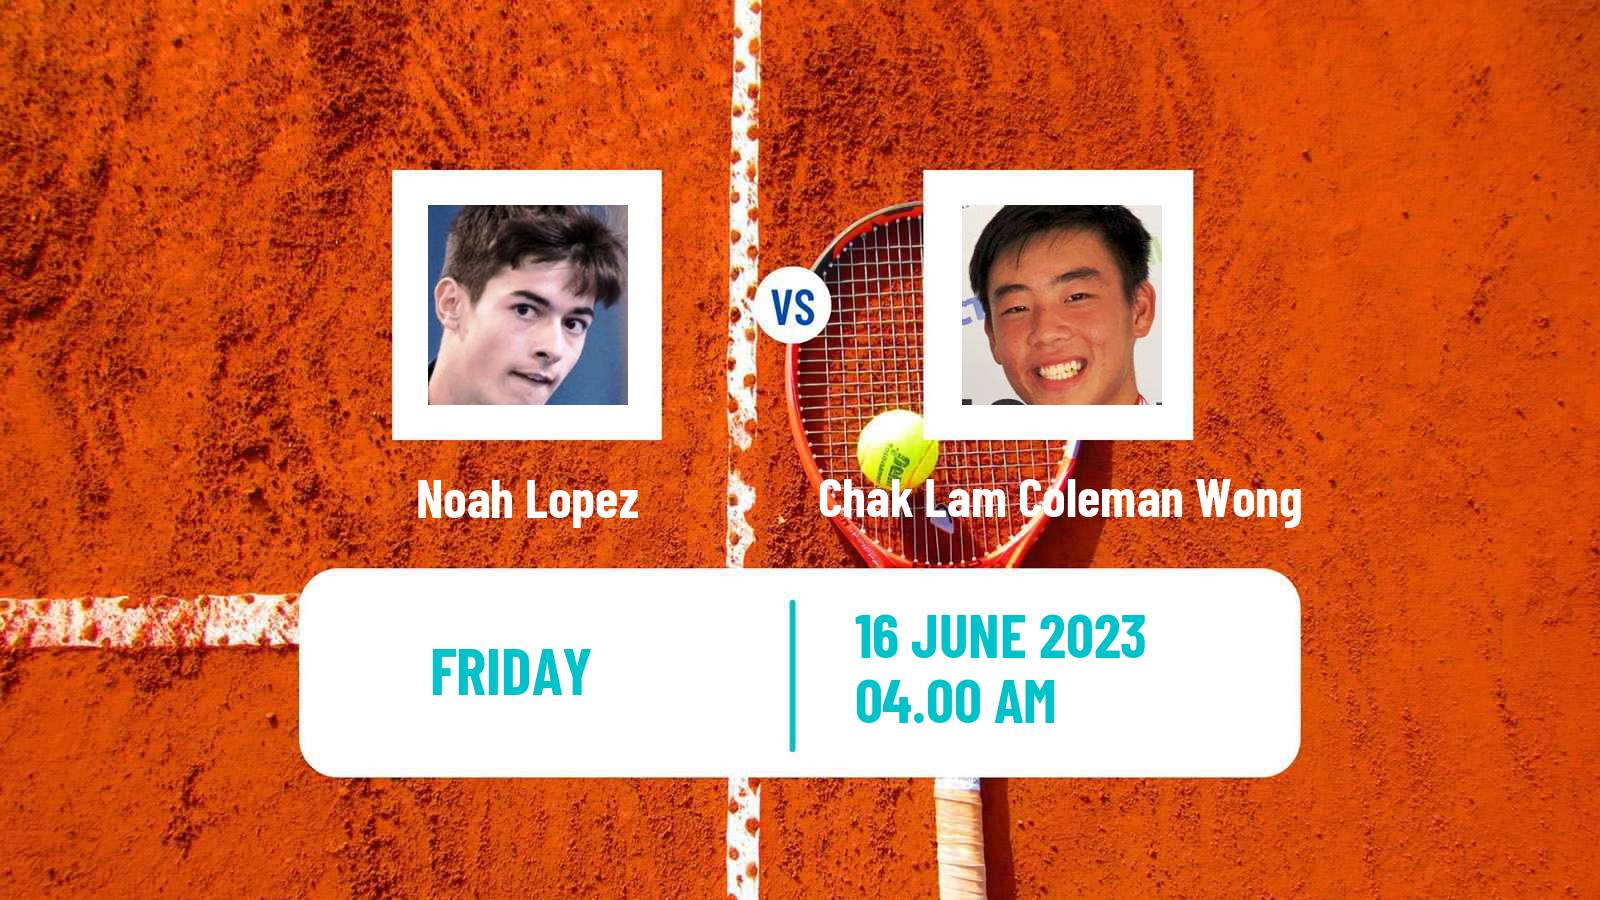 Tennis ITF M15 Monastir 24 Men Noah Lopez - Chak Lam Coleman Wong